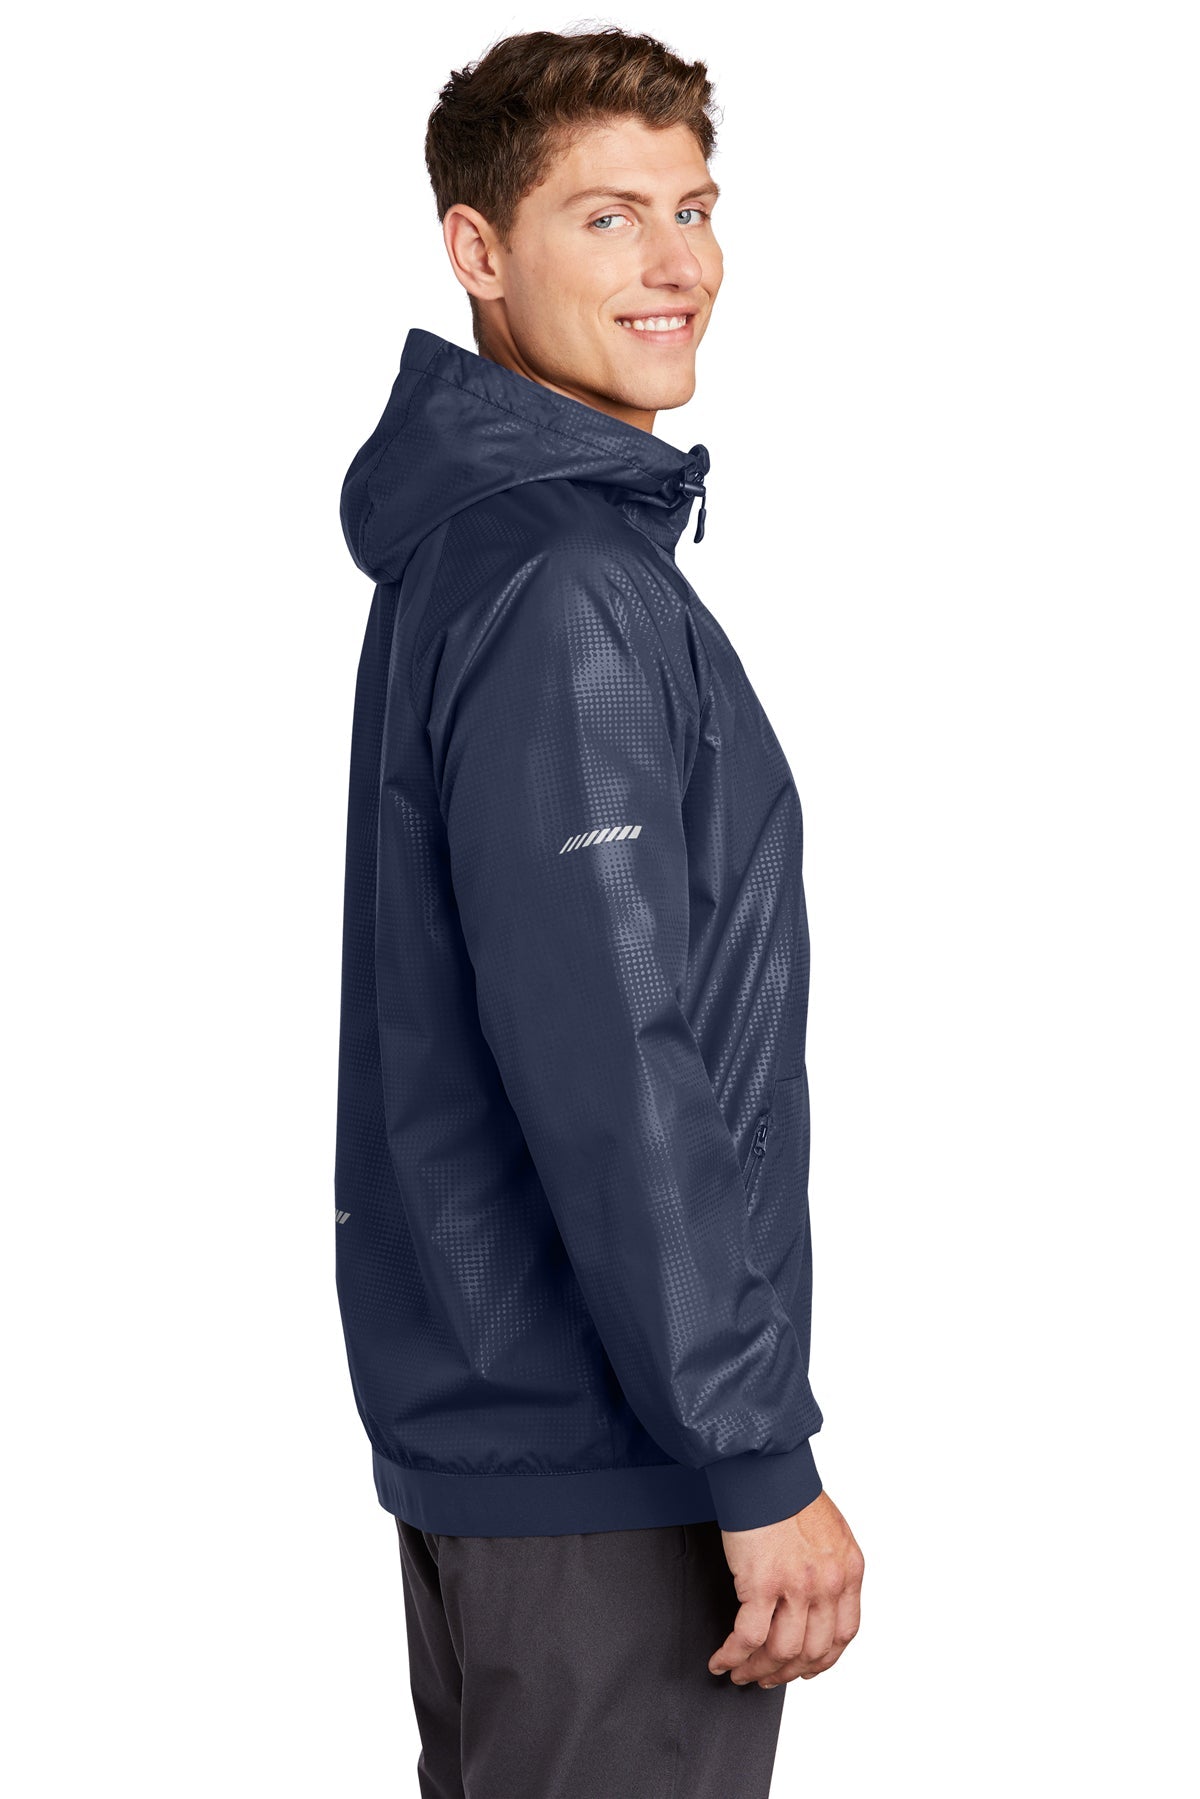 sport-tek_jst53 _true navy/ true navy_company_logo_jackets